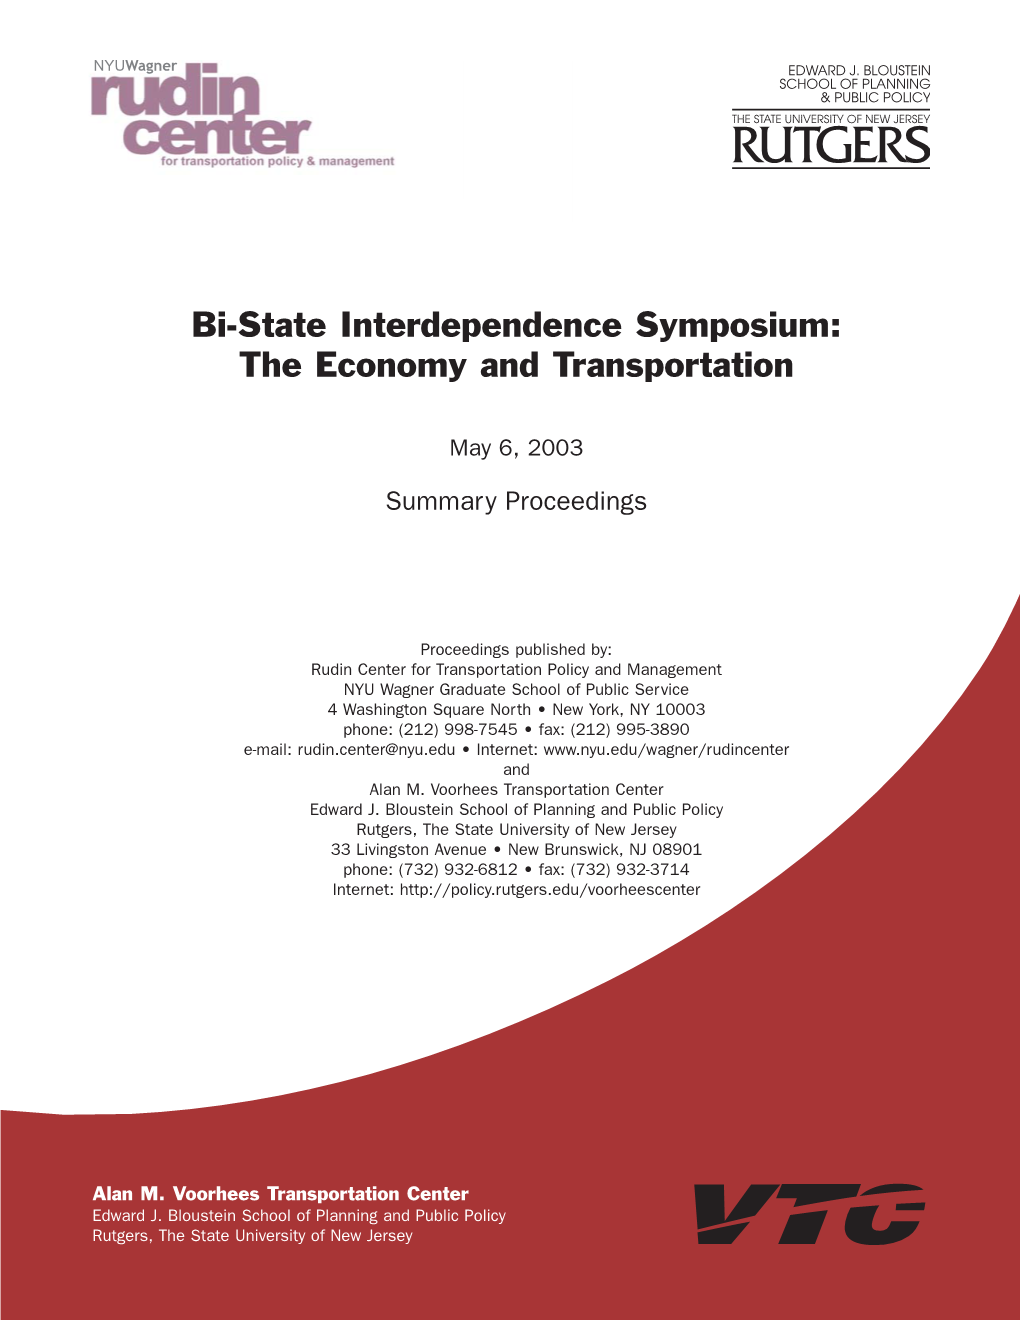 Bi-State Interdependence Symposium: the Economy and Transportation